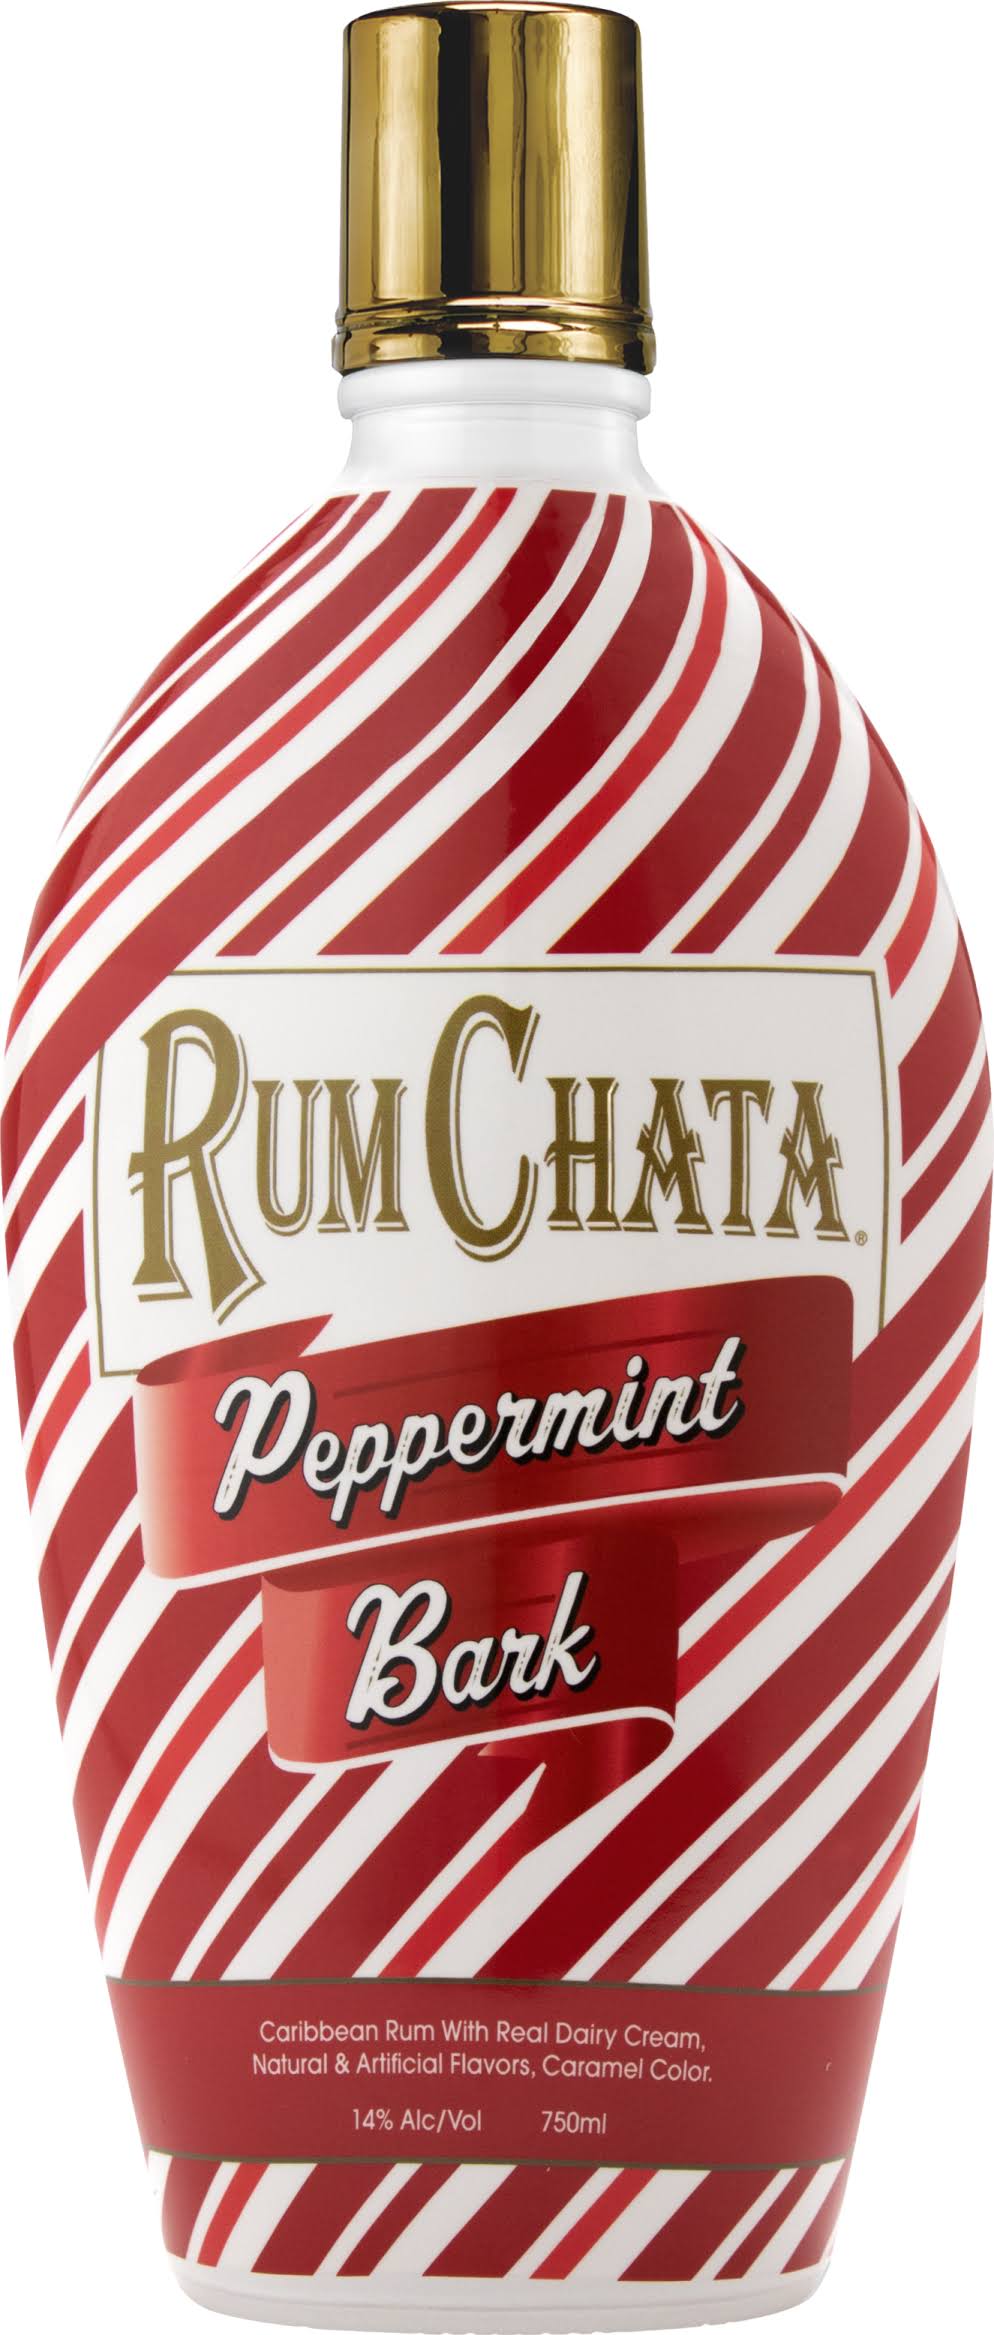 Rumchata Caribbean Rum, With Real Dairy Cream, Peppermint Bark - 750 ml